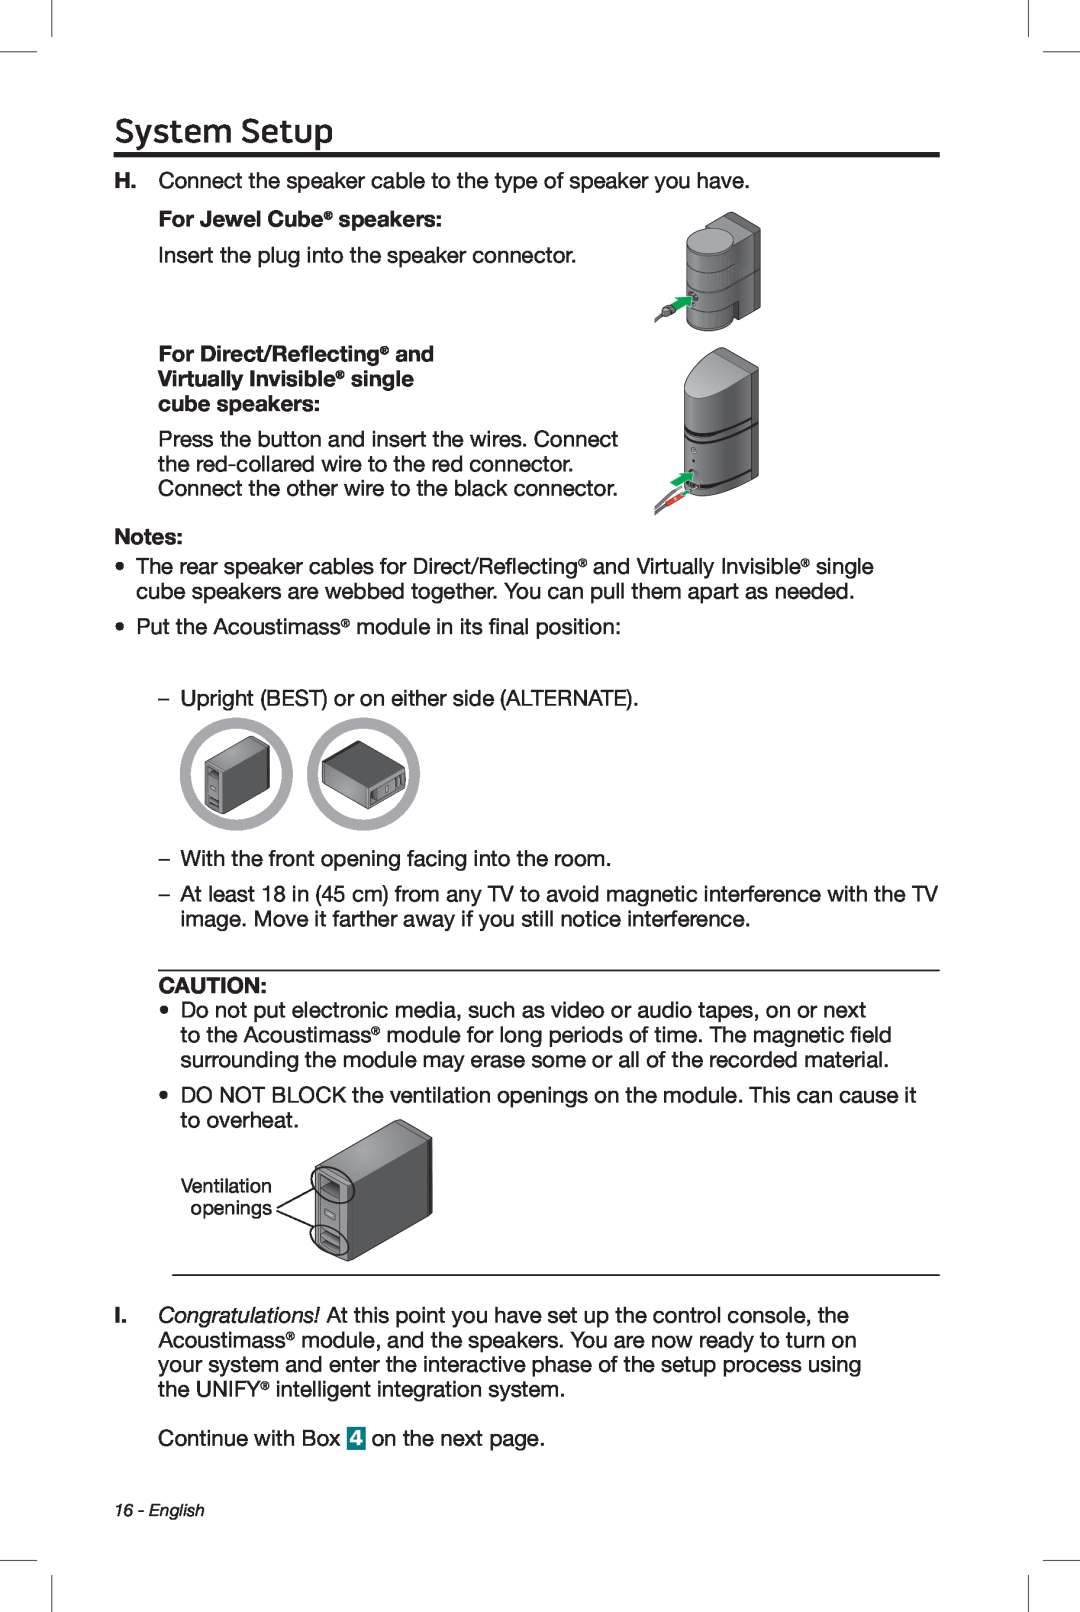 Bose 535, 520, 525, 510 setup guide For Jewel Cube speakers, System Setup 